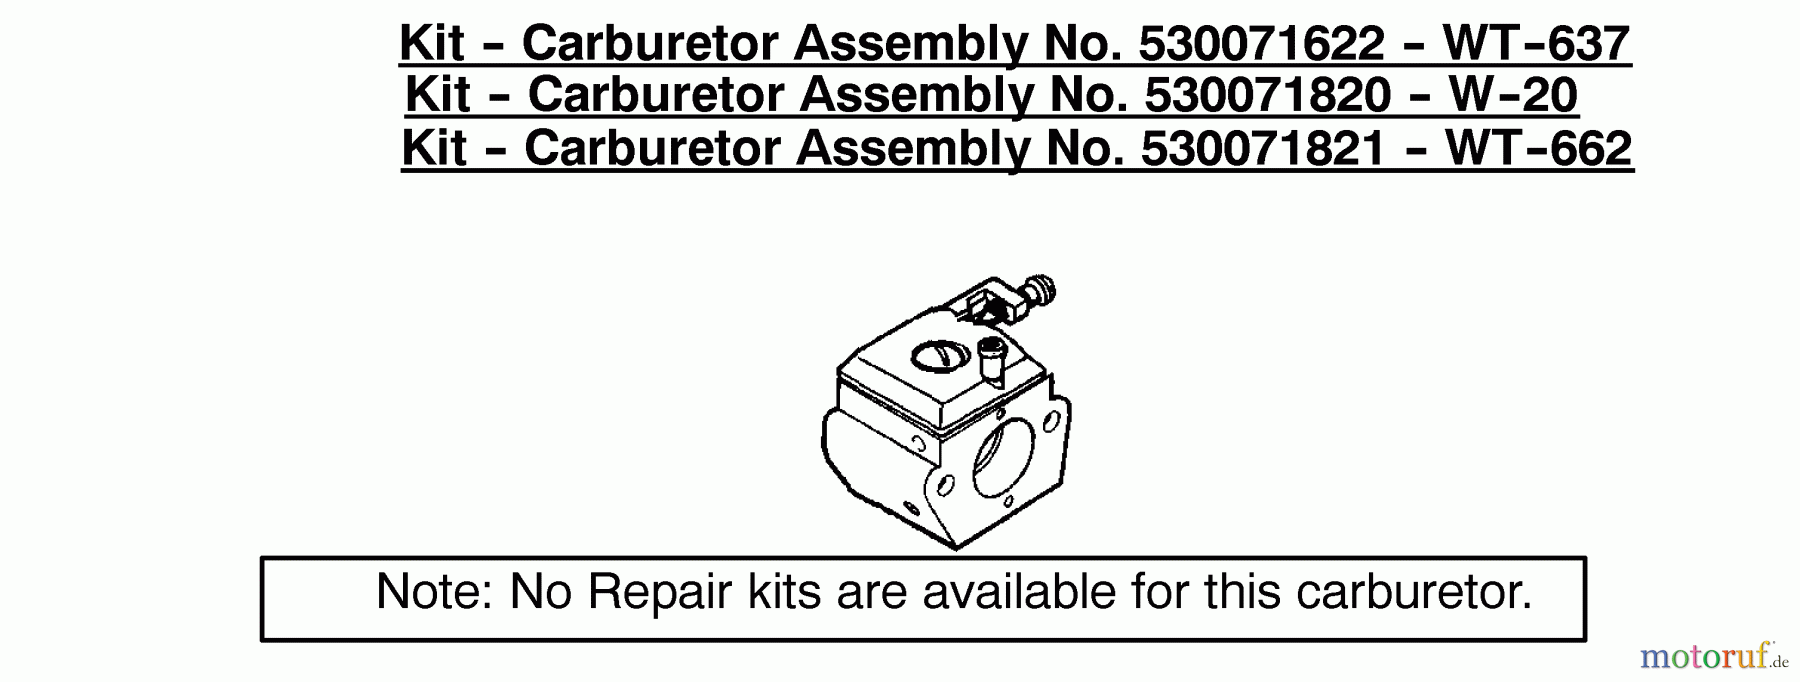  Poulan / Weed Eater Motorsägen 1950LE (Type 1) - Poulan Woodshark Chainsaw Kits - Carburetor Assembly 530071622/530071820/530071821